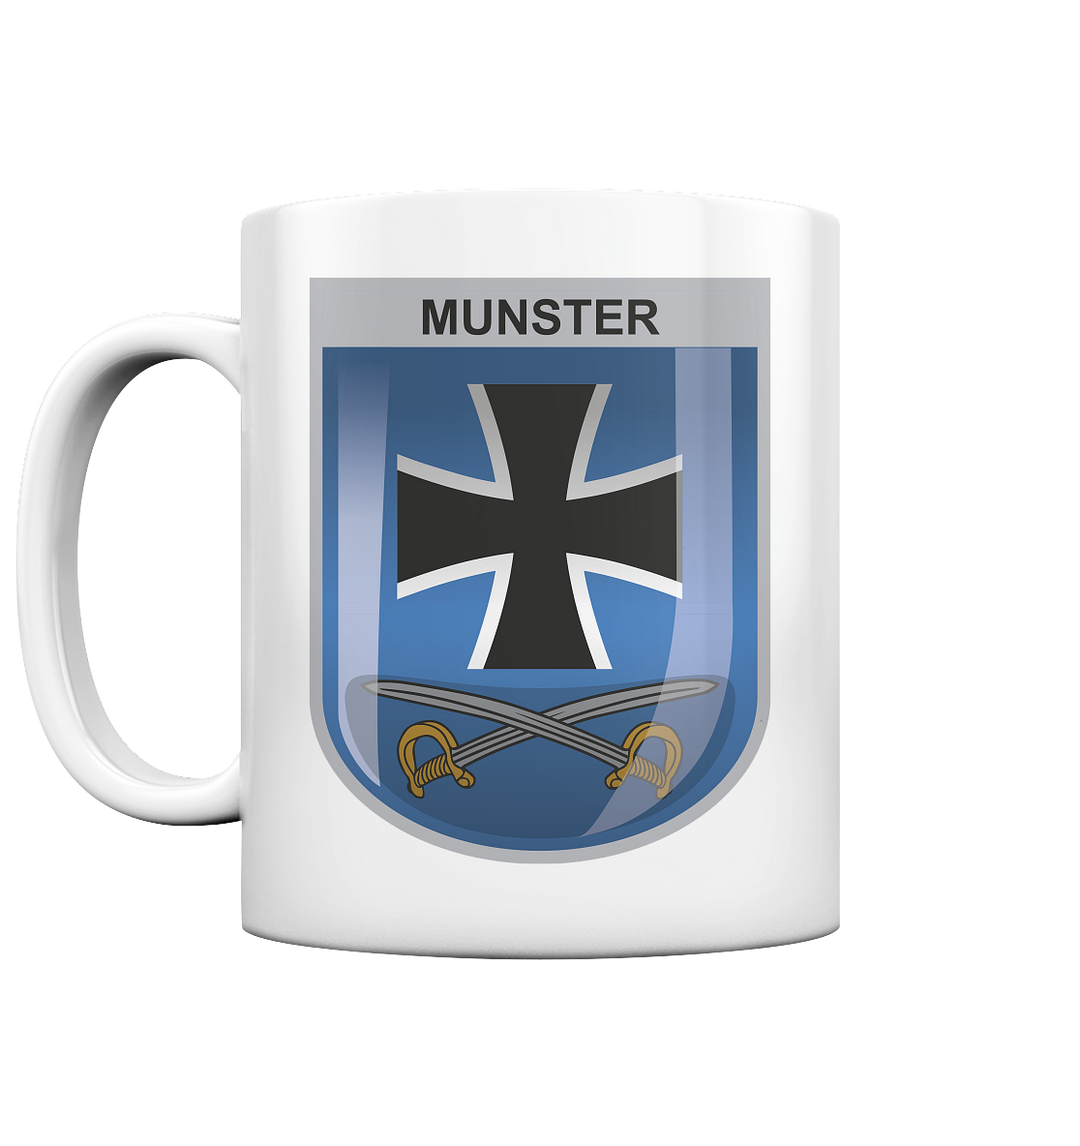 "OA Btl Munster" - Tasse glossy